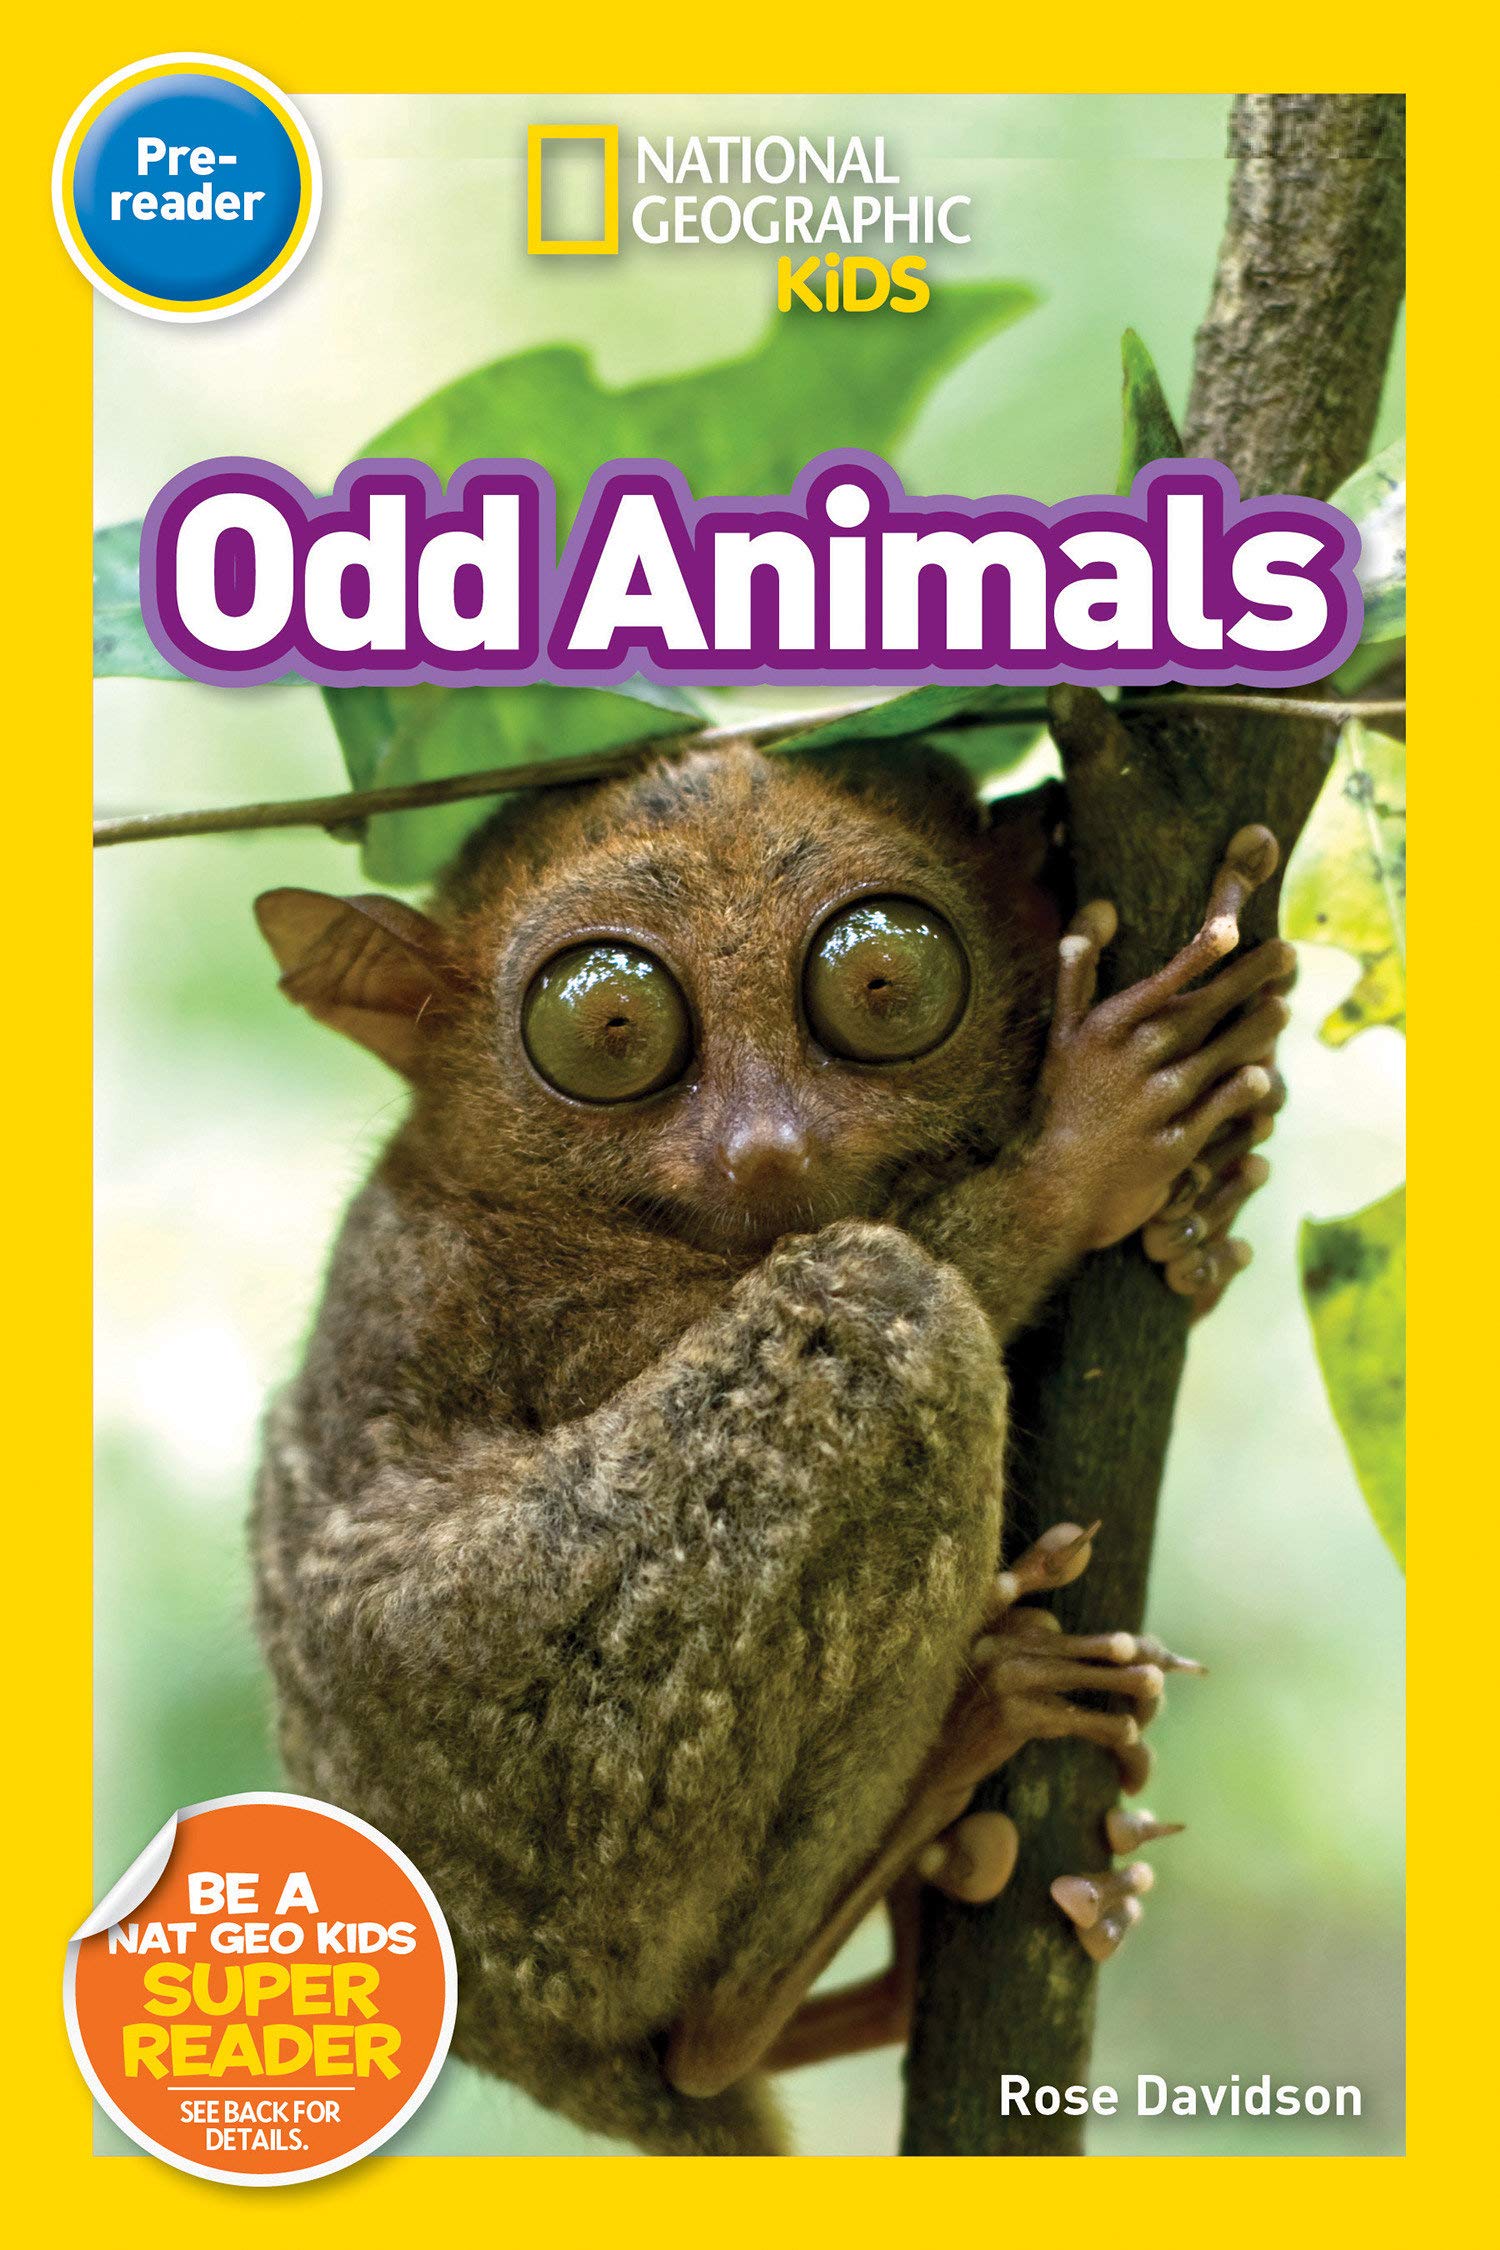 National Geographic Kids: Odd Animals